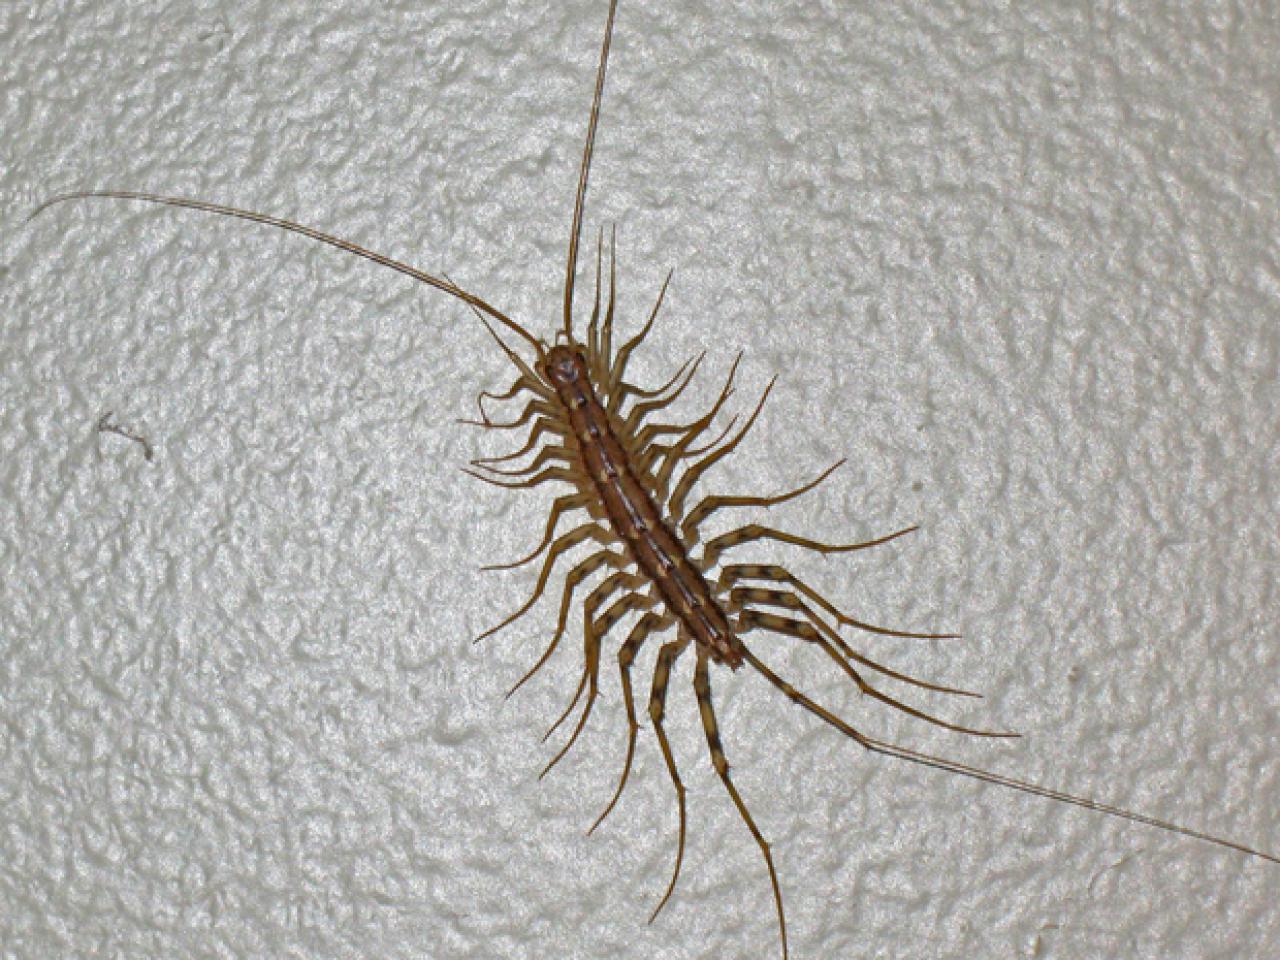 House Centipede Hgtv